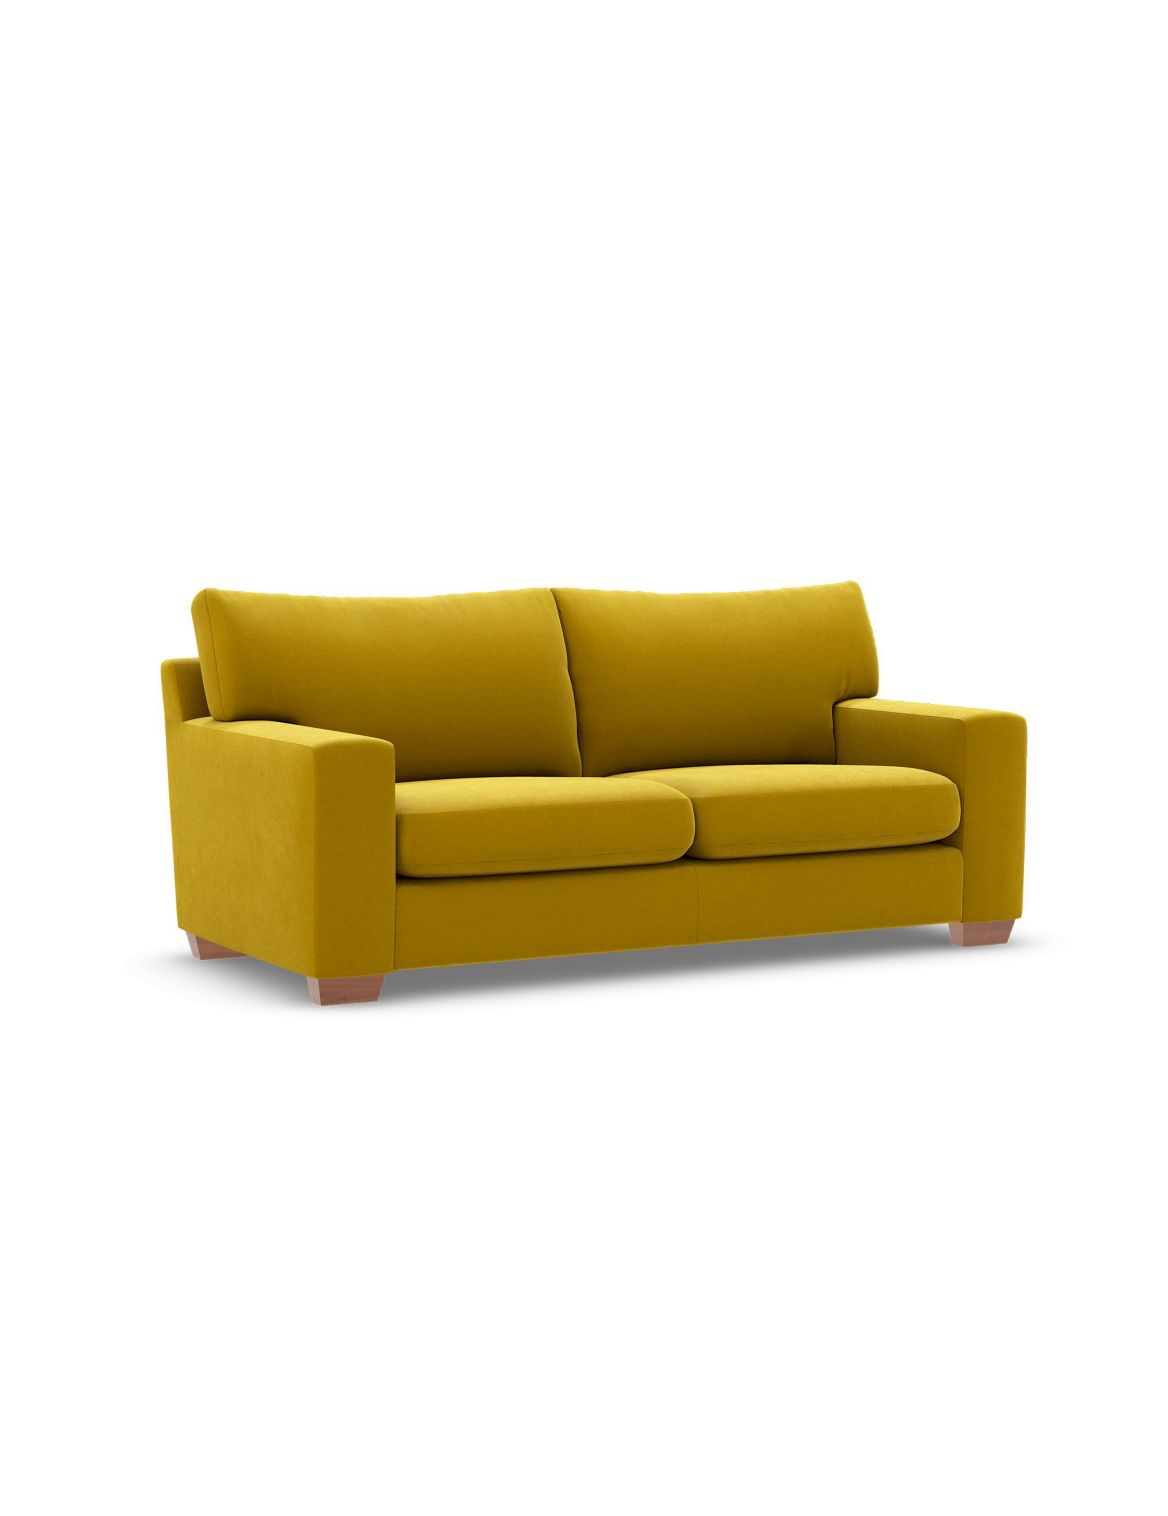 Alfie Medium Sofa yellow